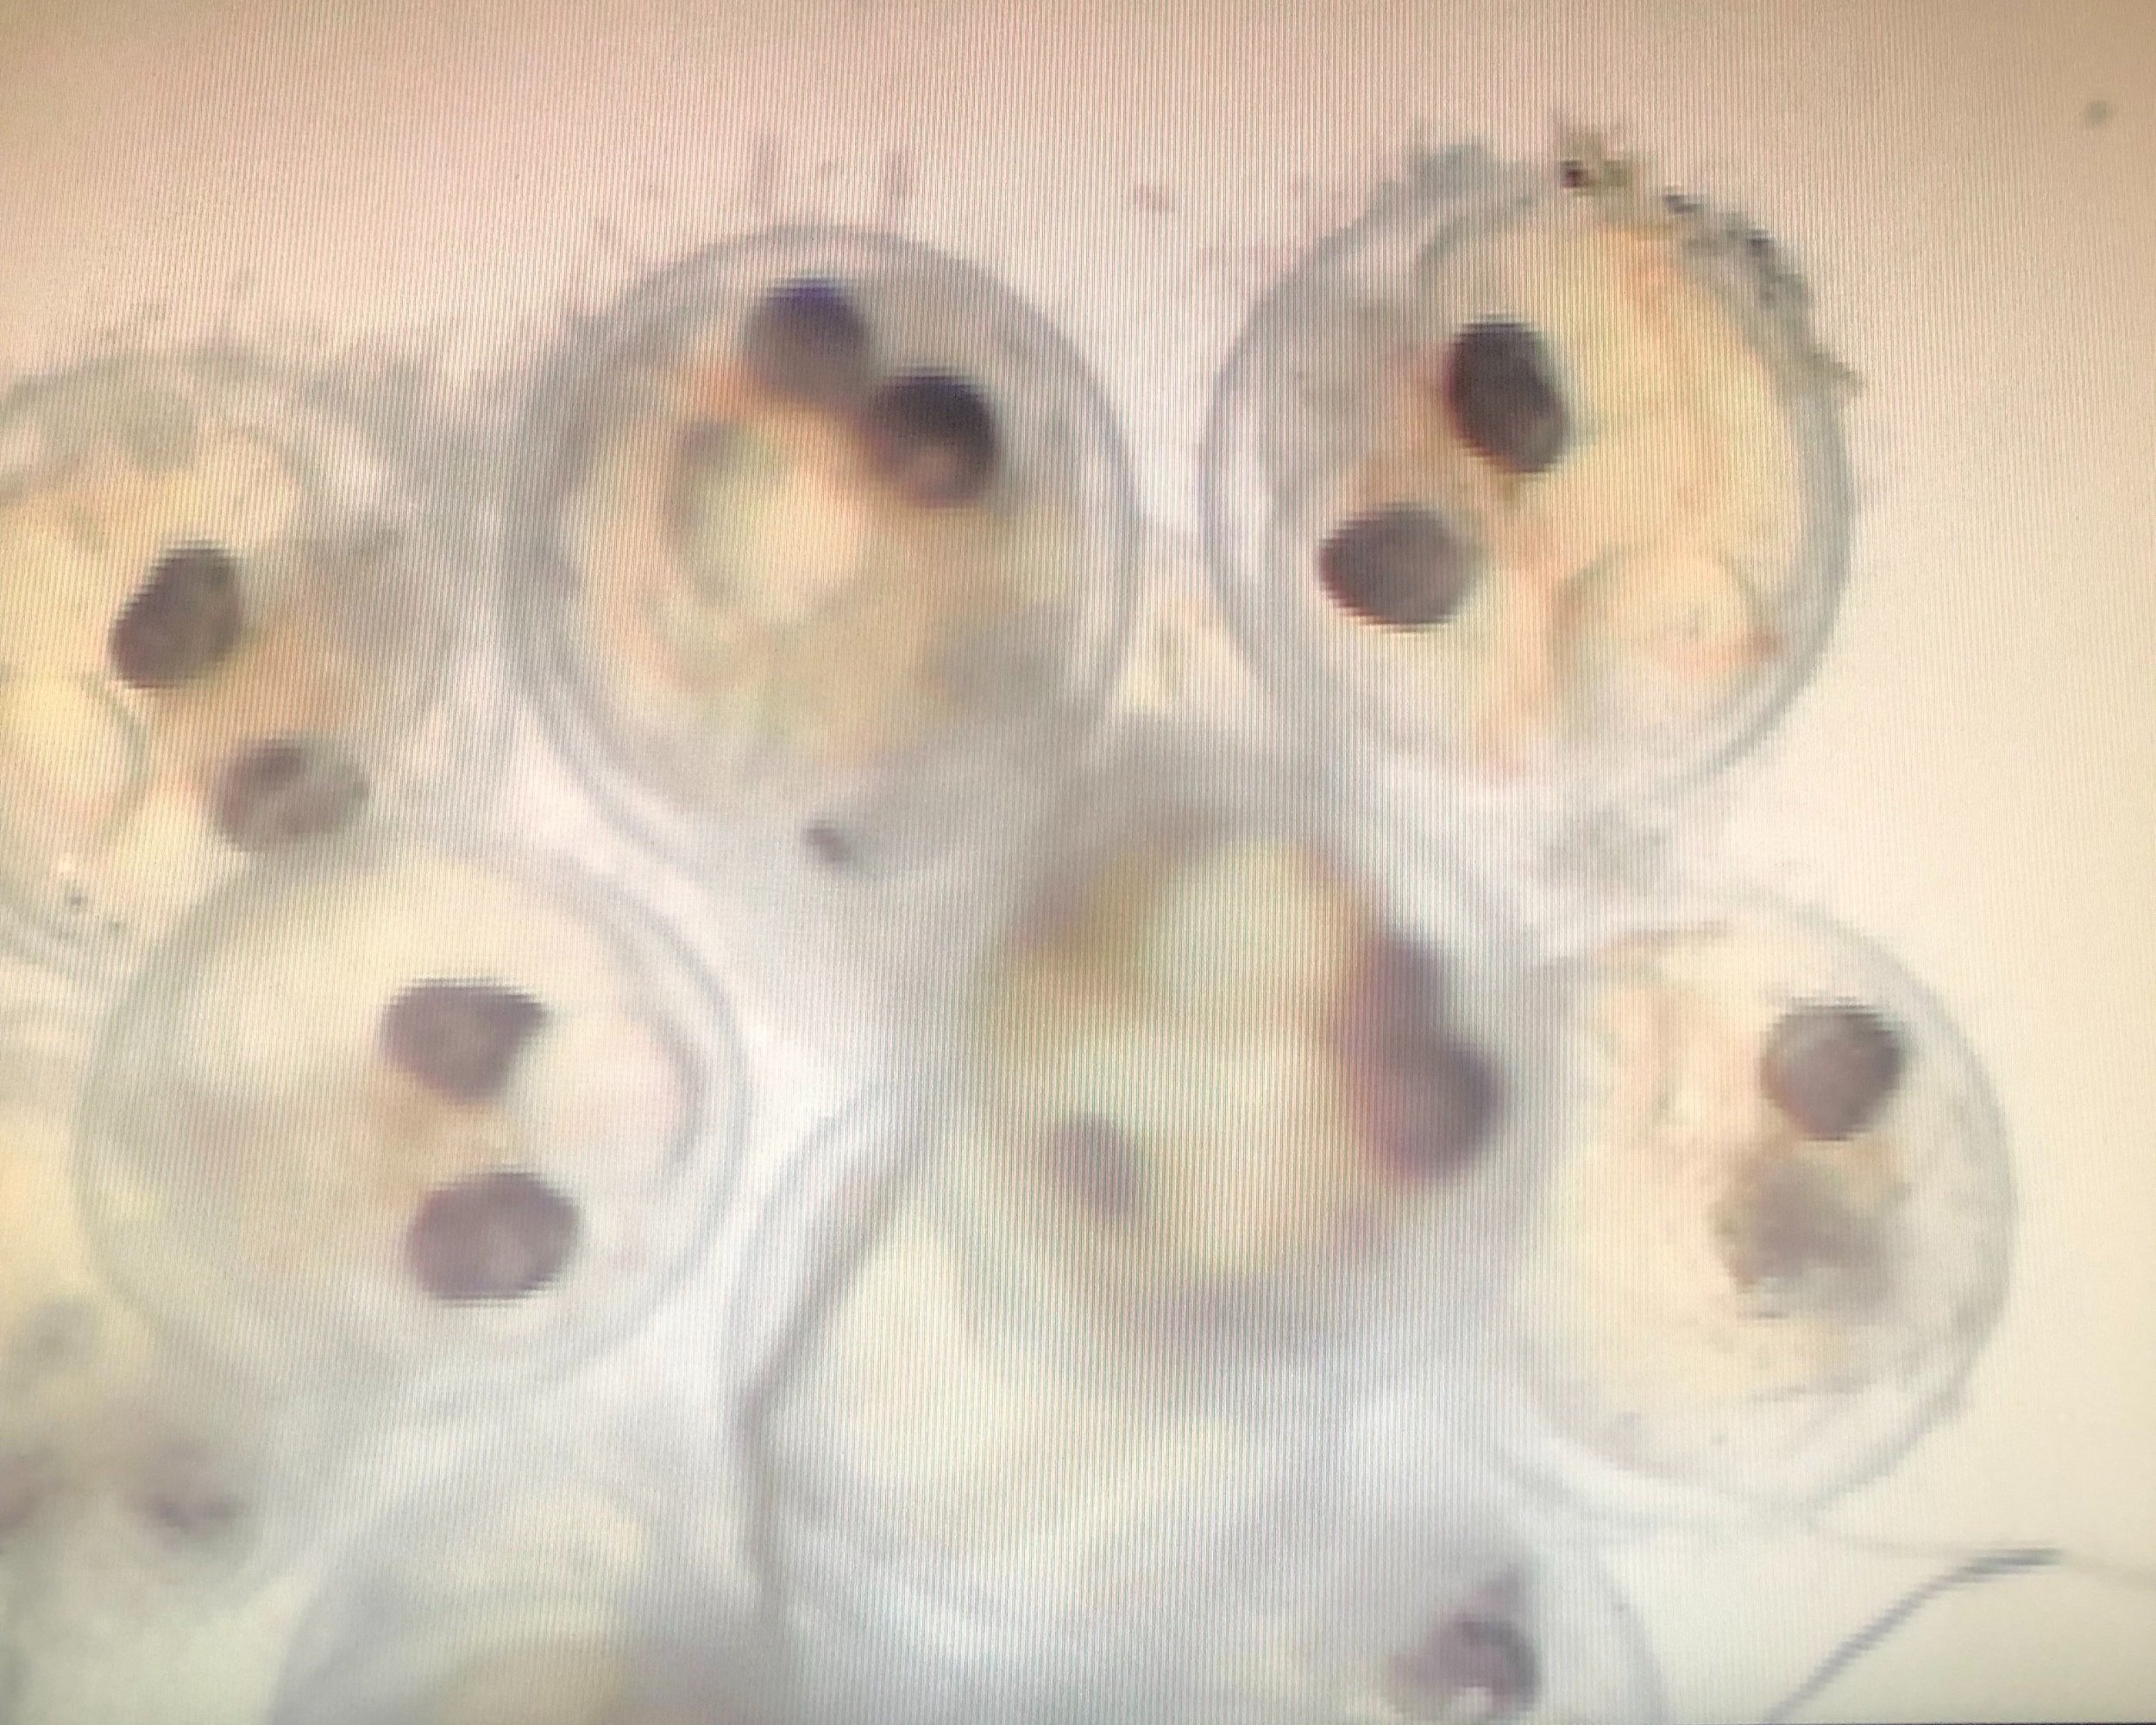 Fish embryos (developed fish eggs) seen through a microscope in Aquatic Omics Lab at Ontario Tech University 